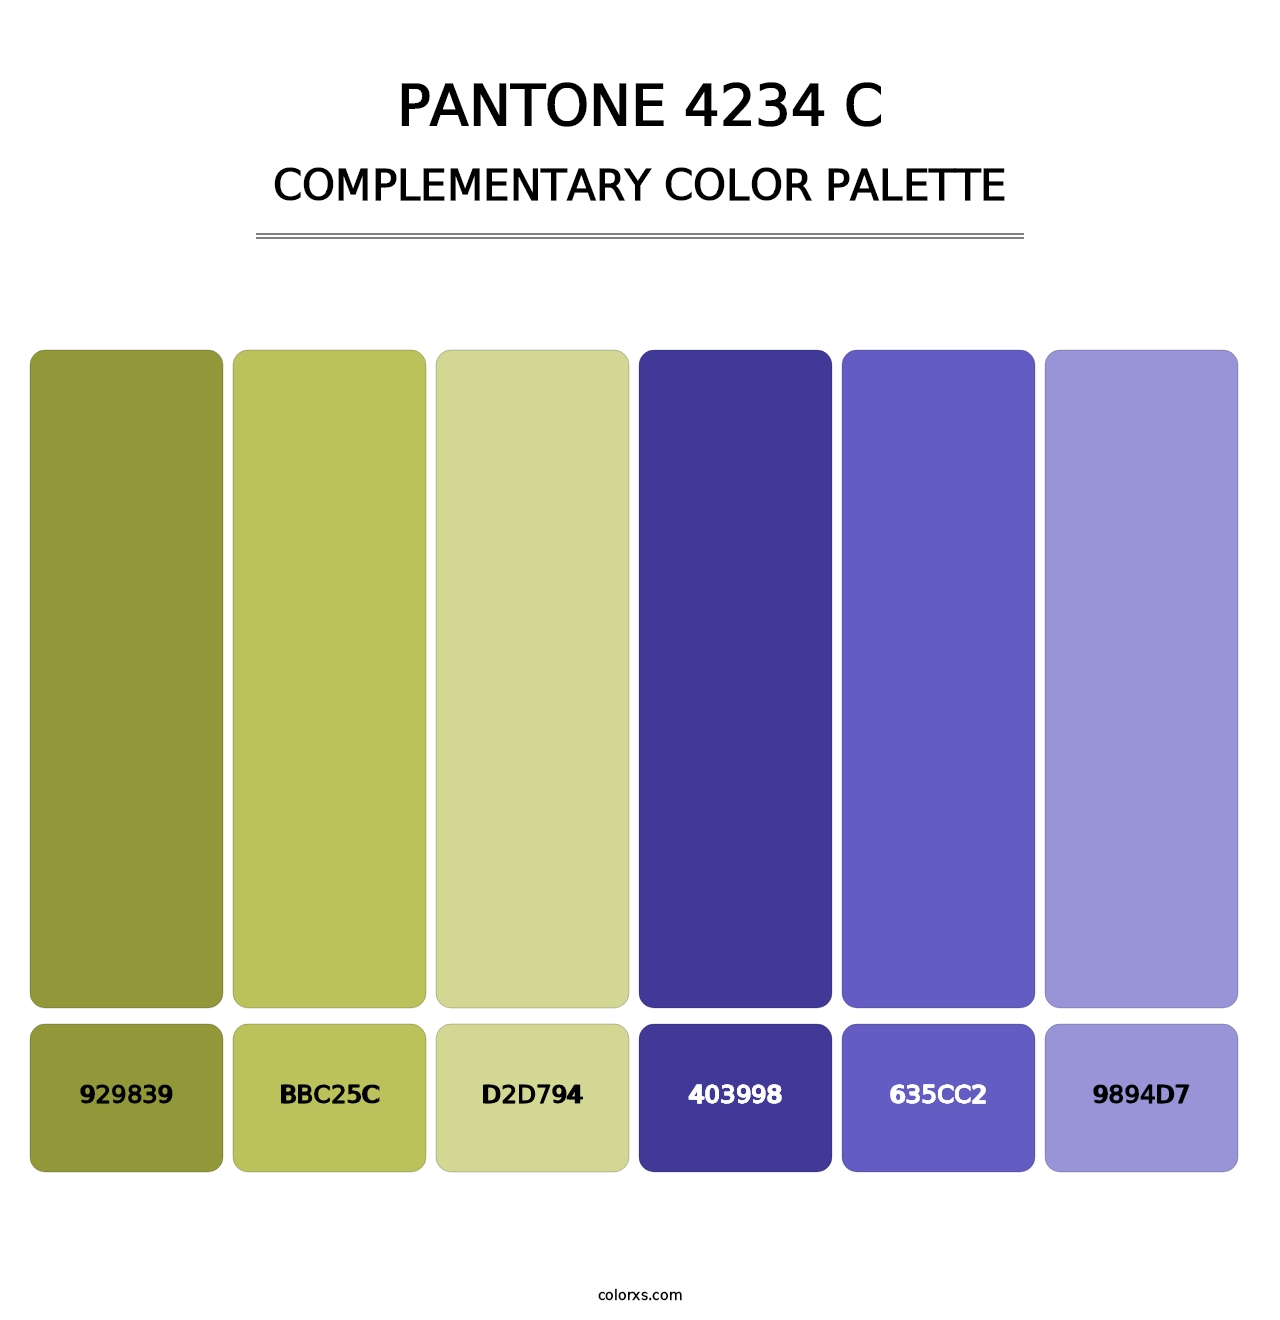 PANTONE 4234 C - Complementary Color Palette